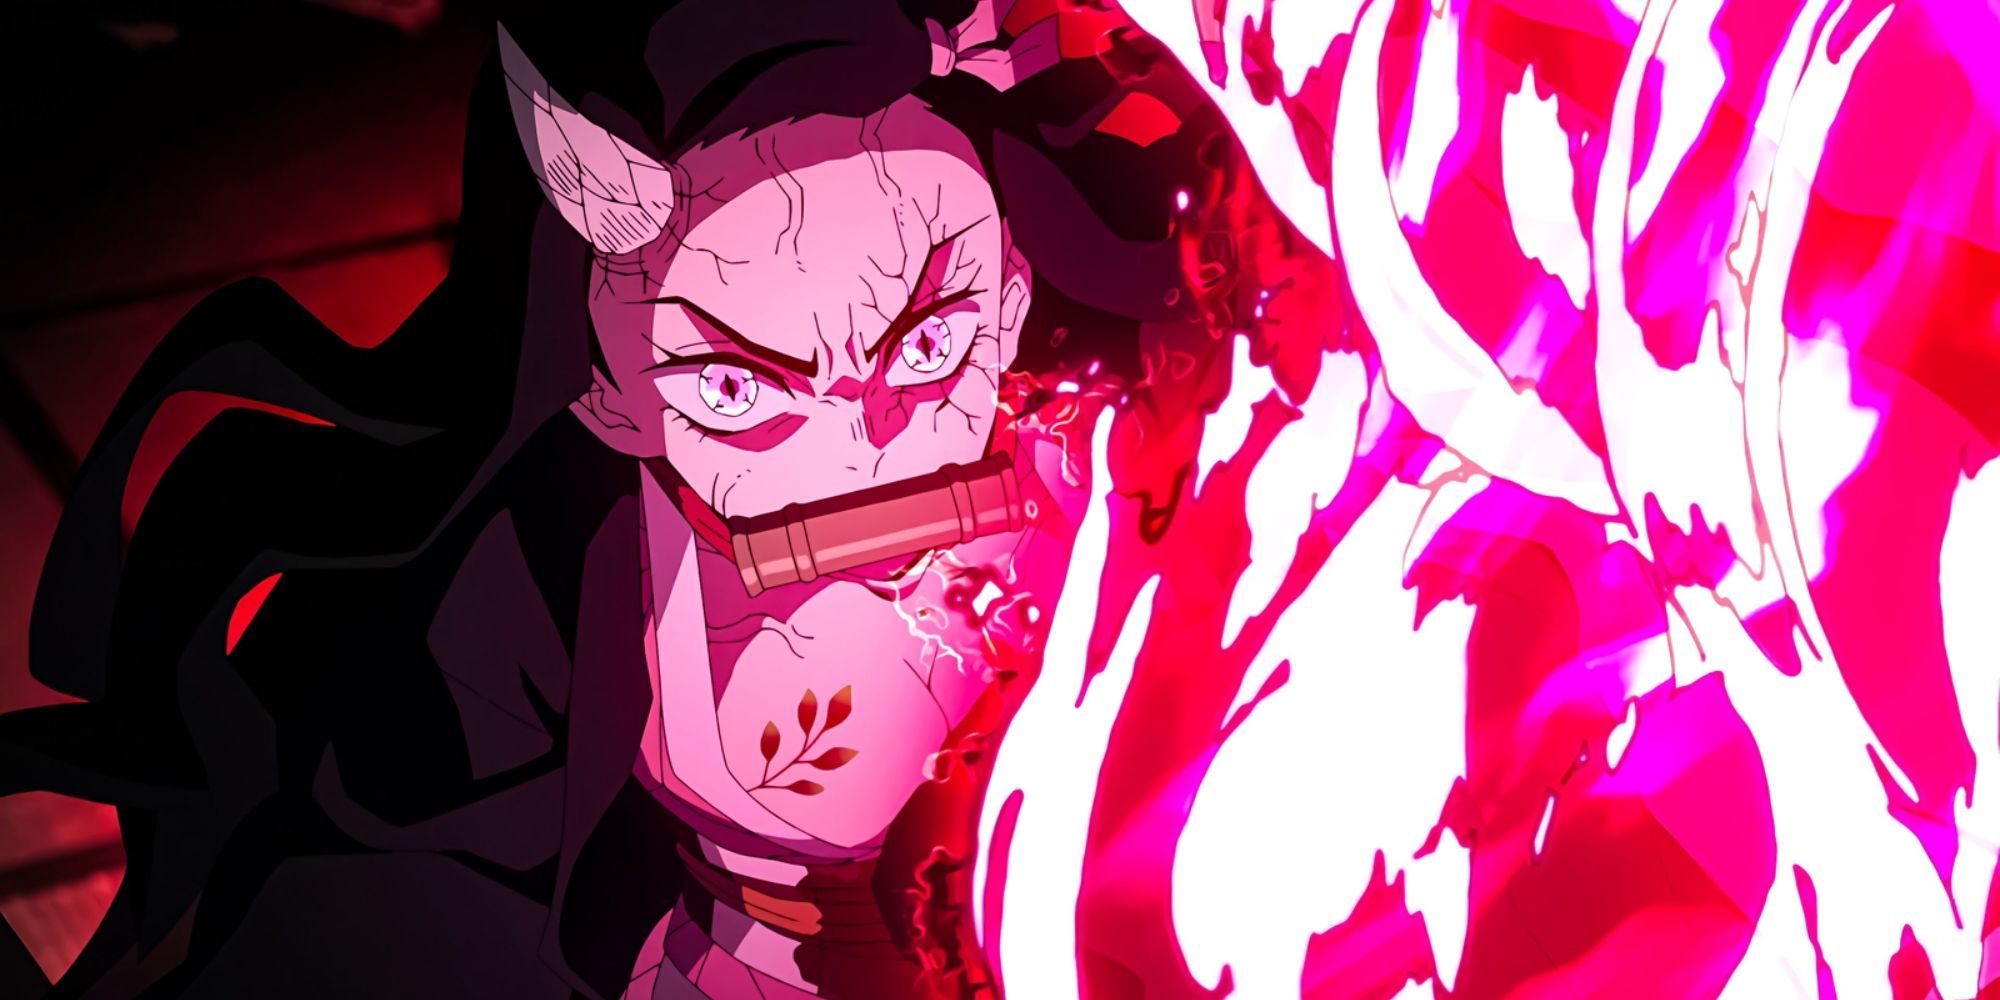 Blood Demon Art of Nezuko vs Hantegu in Demon Slayer